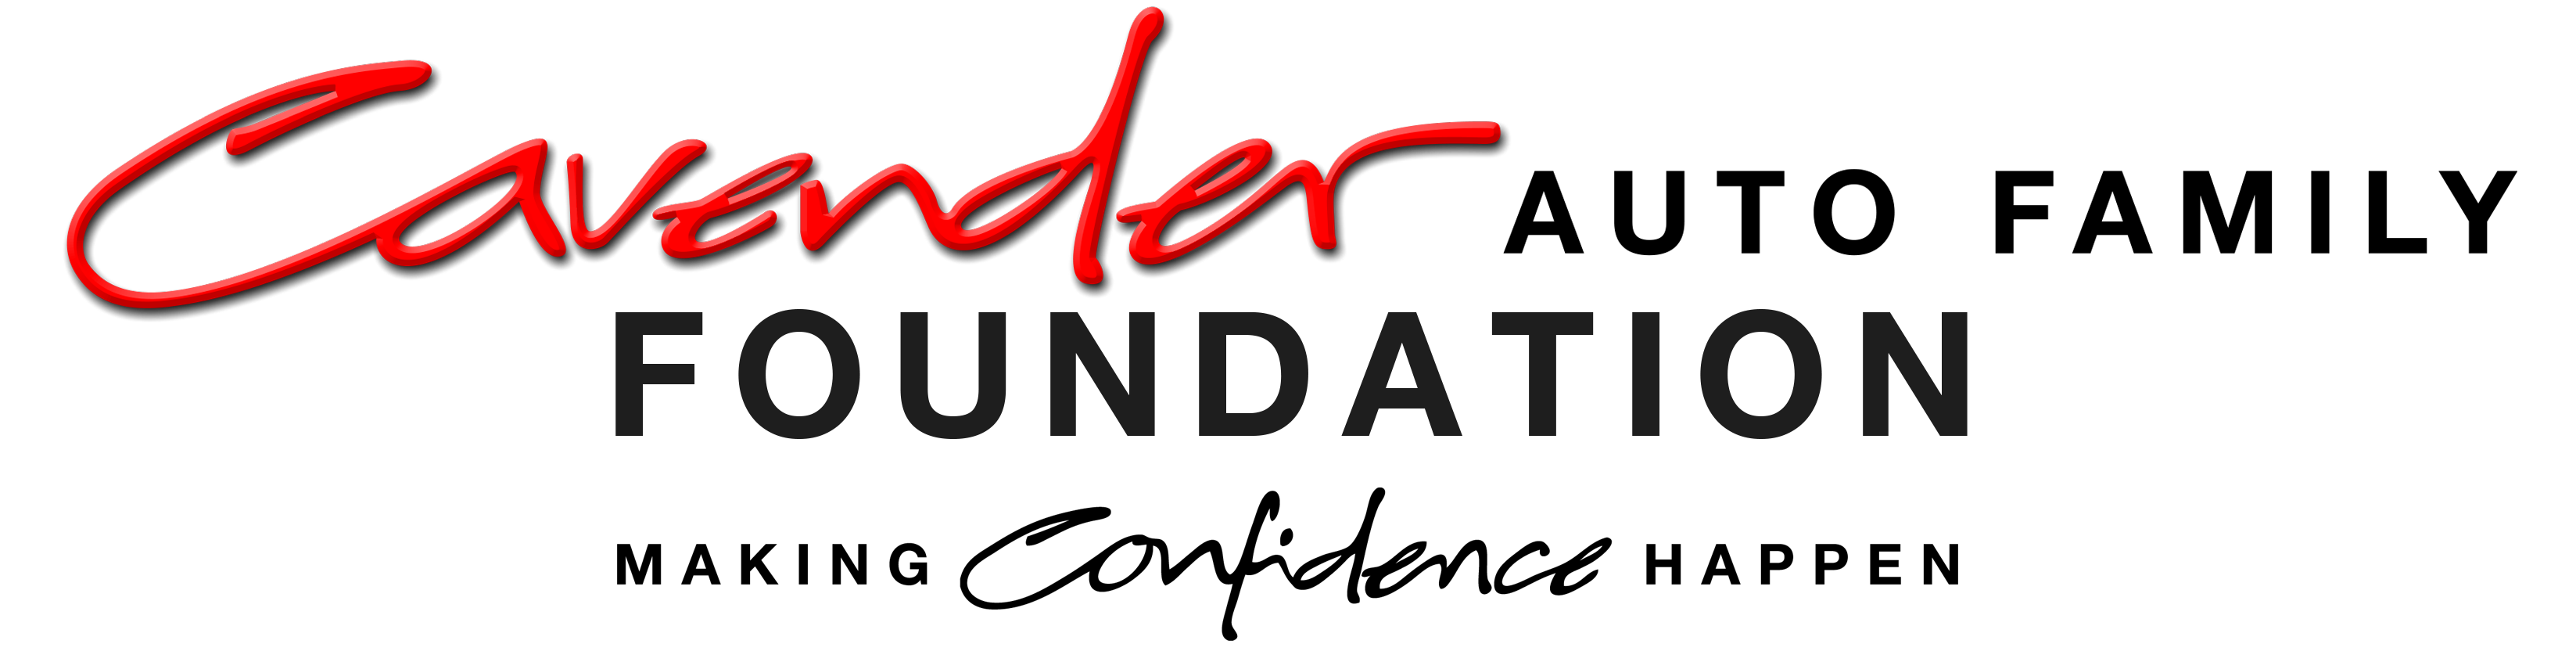 Cavender Auto Family Foundation